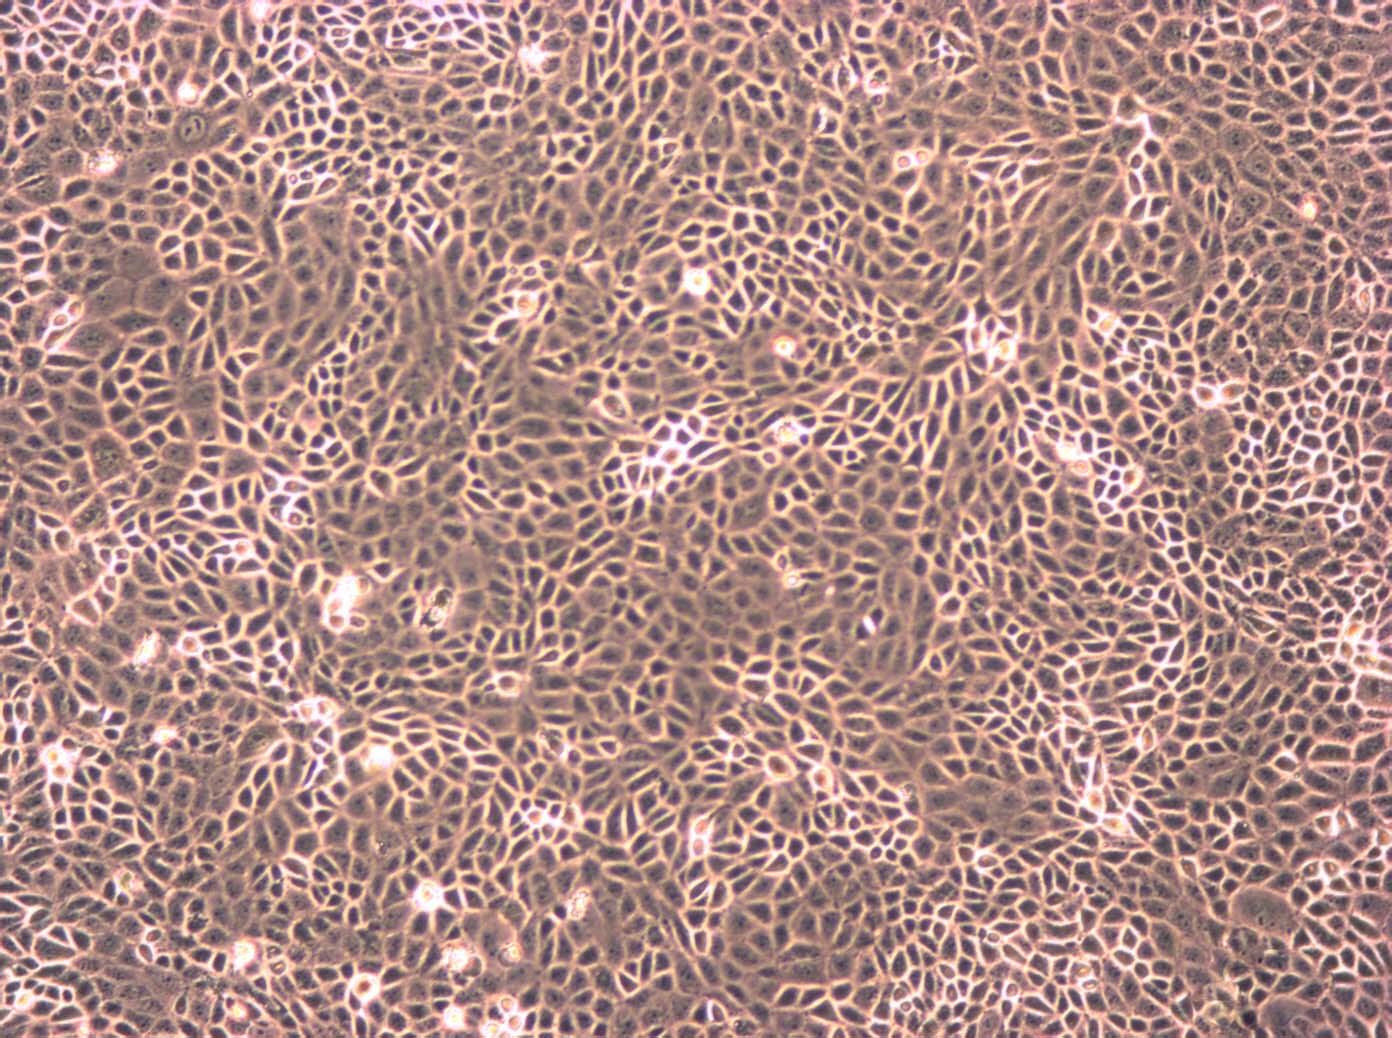 IOSE-29:人卵巢上皮复苏细胞(提供STR鉴定图谱)